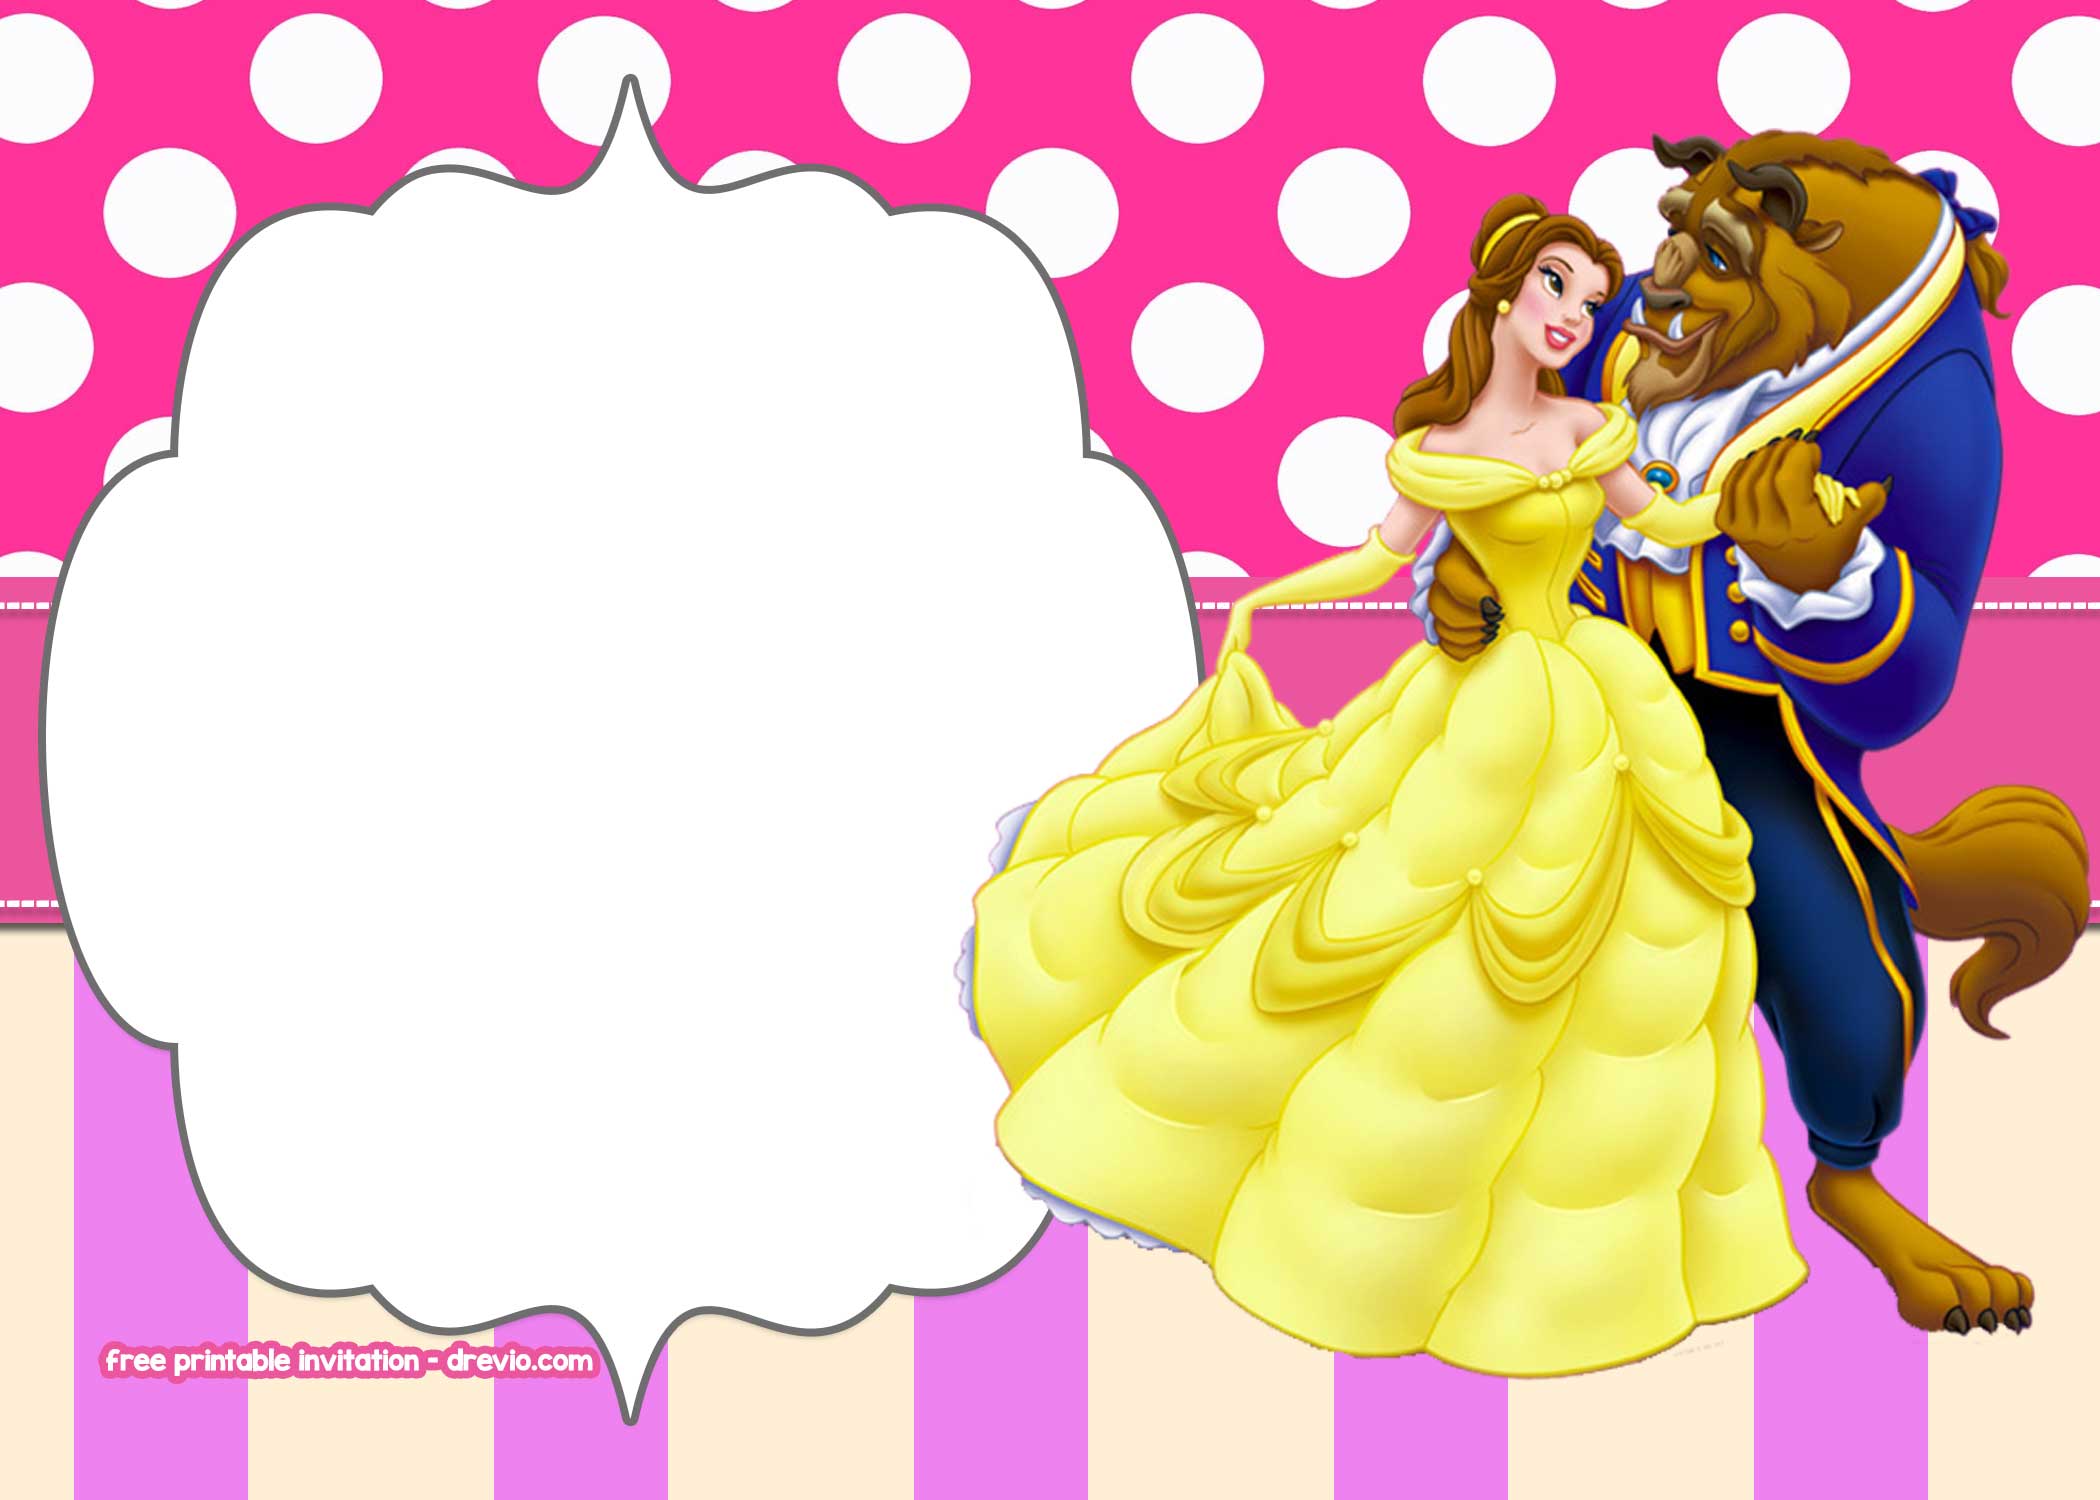 FREE Printable Princess Belle Beauty and the Beast invitation polkadot